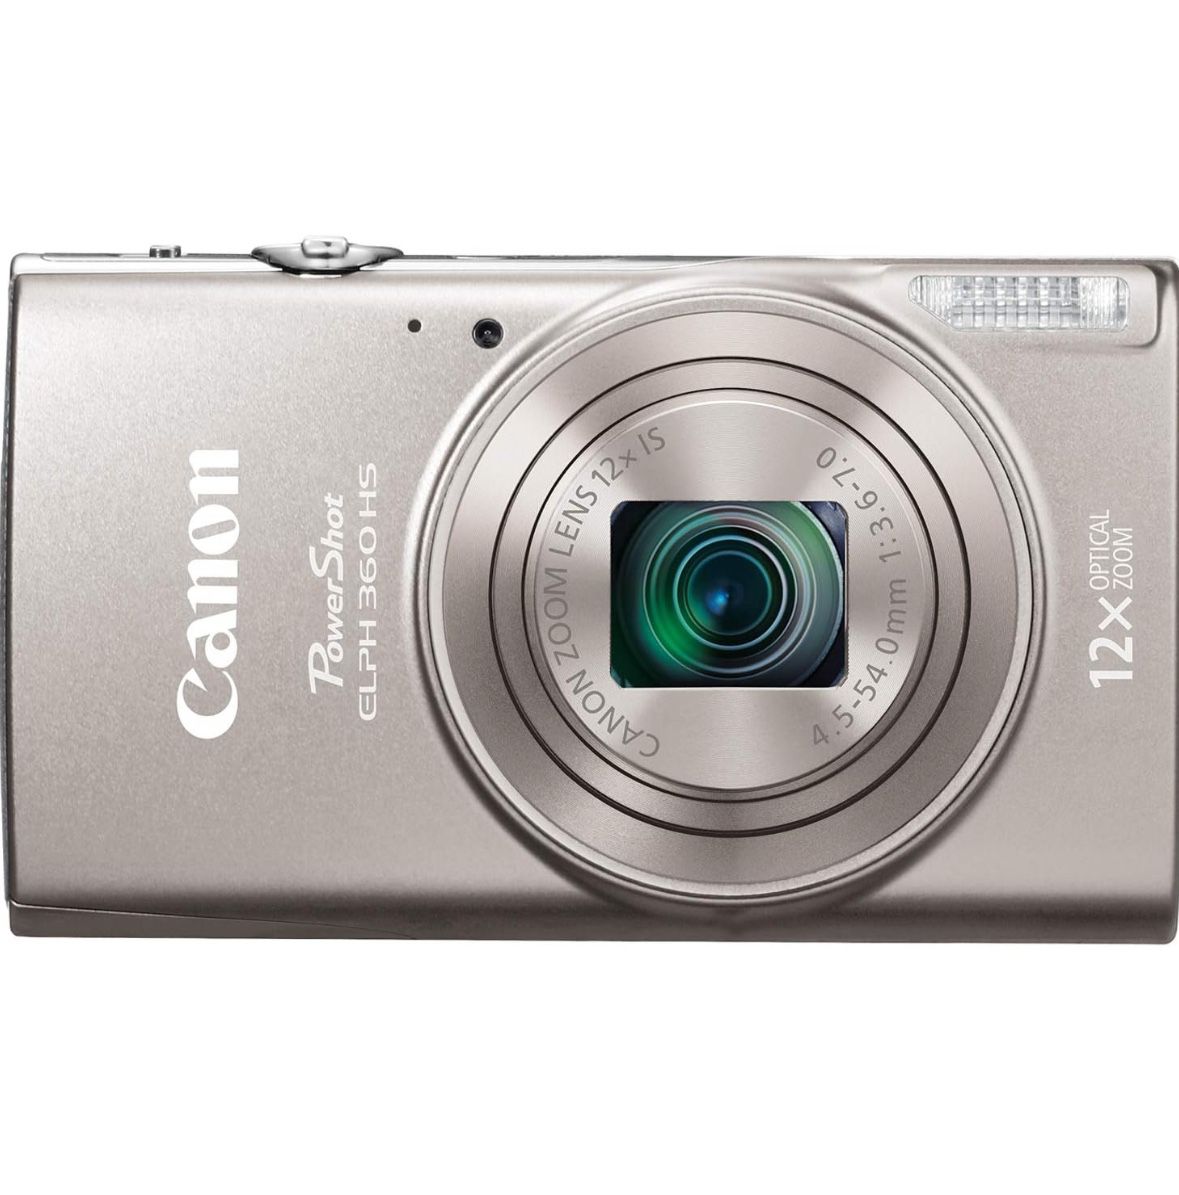 Canon Power shot camera Brand new 